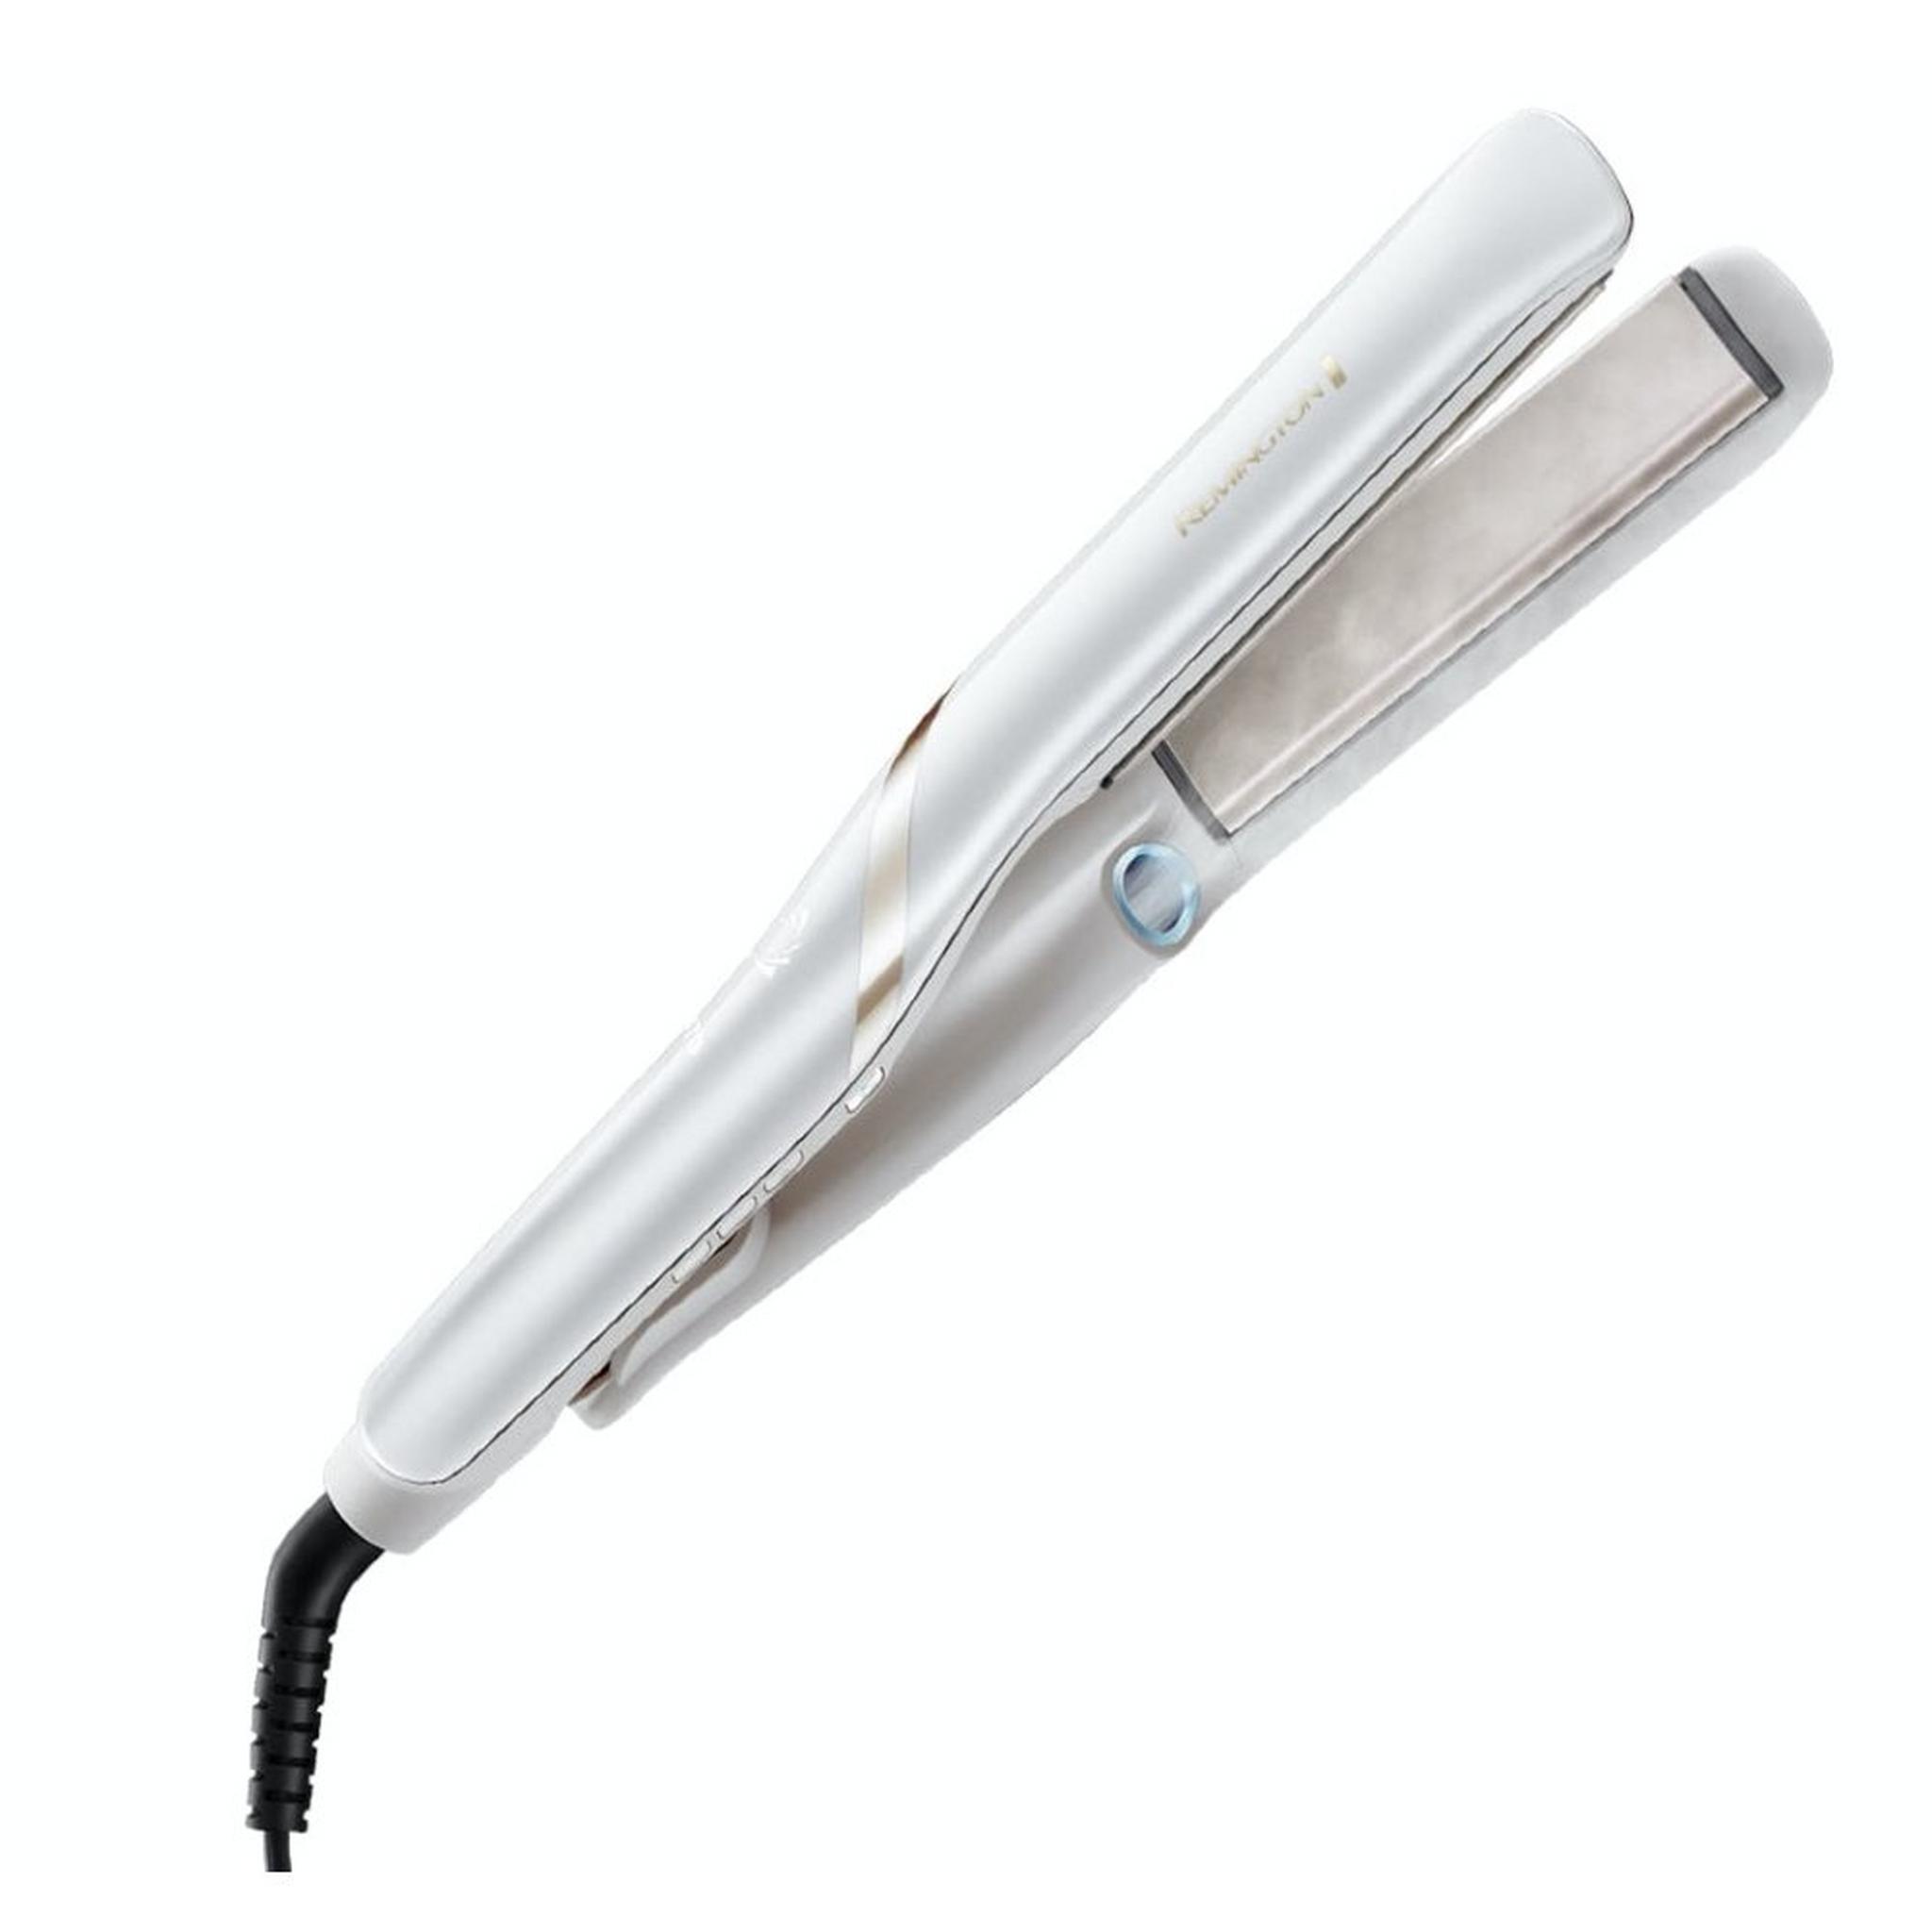 Remington Hydraluxe Pro Hair Straightener , 5 Heat Settings, S9001 - White